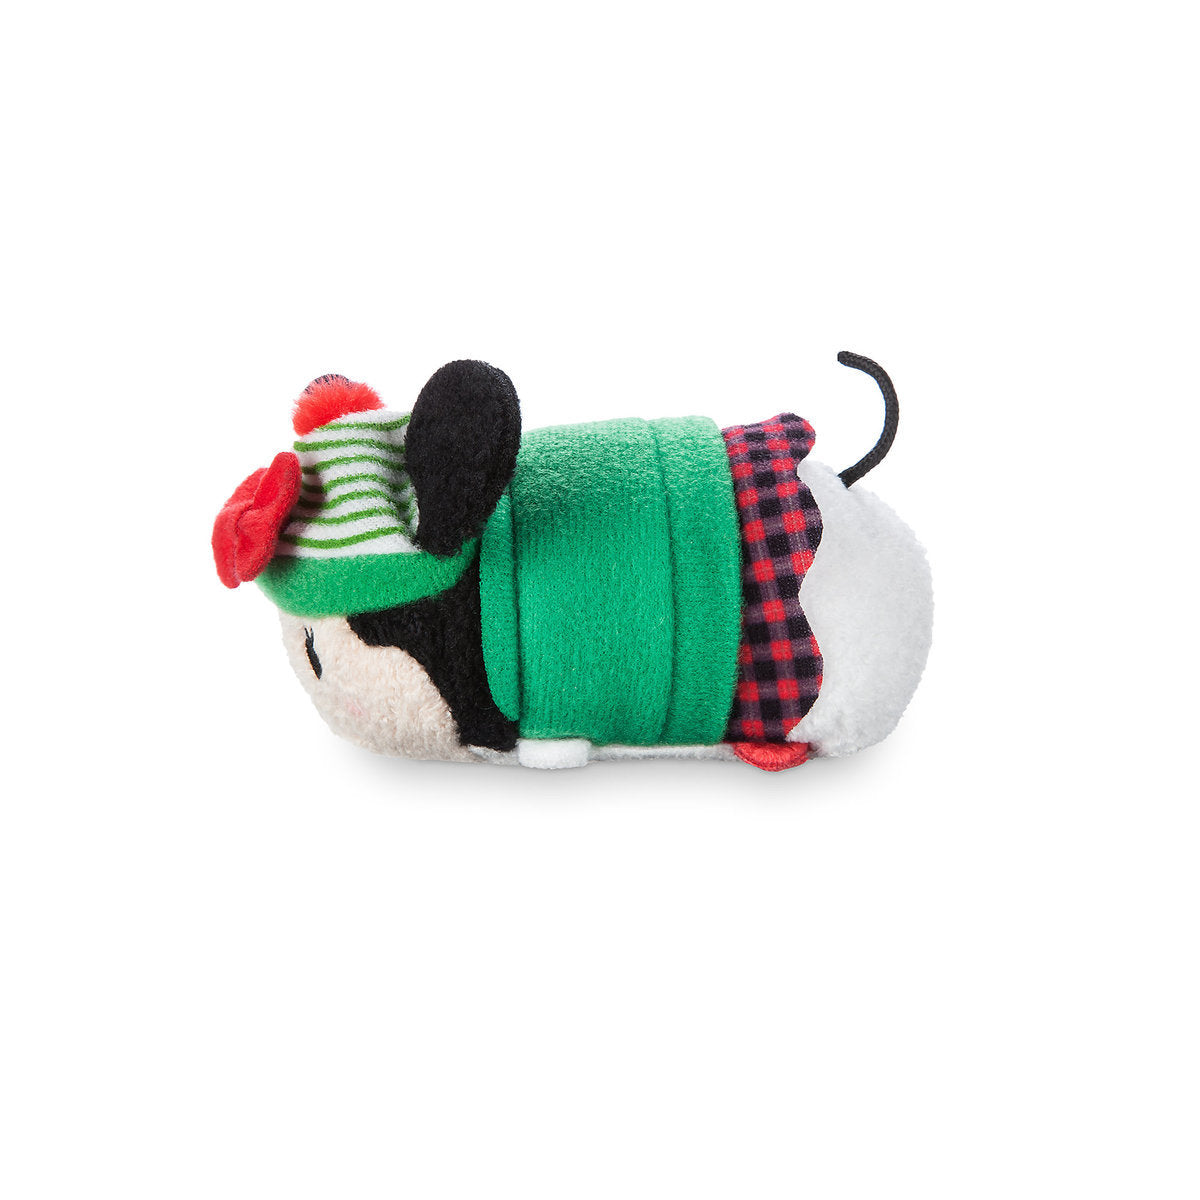 Disney Usa Share the Magic Minnie Christmas Holiday Tsum Plush New with Tags